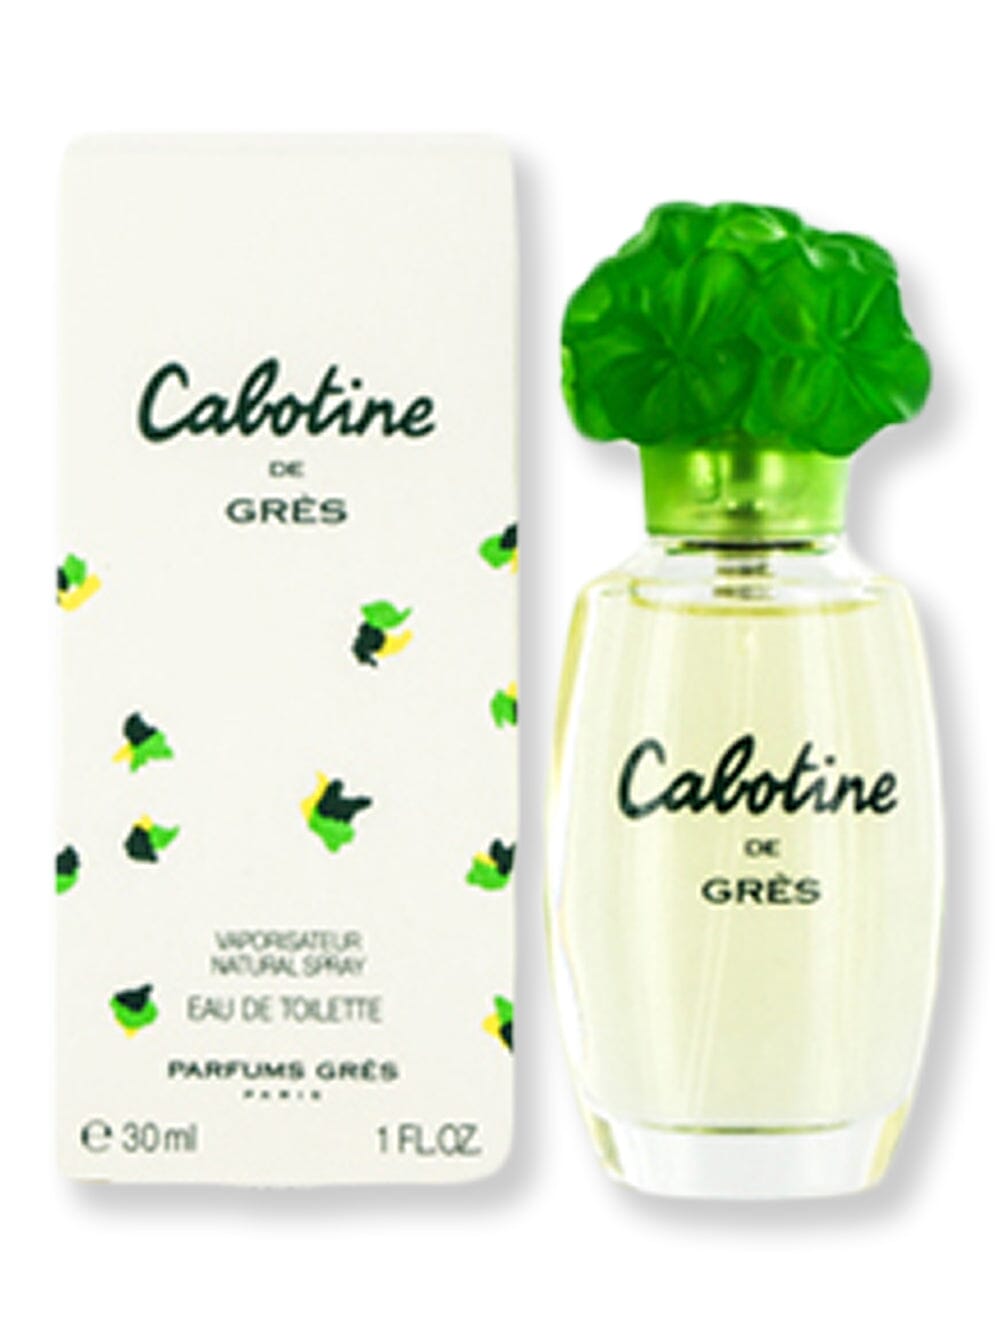 Gres Gres Cabotine EDT Spray 1 oz Perfume 